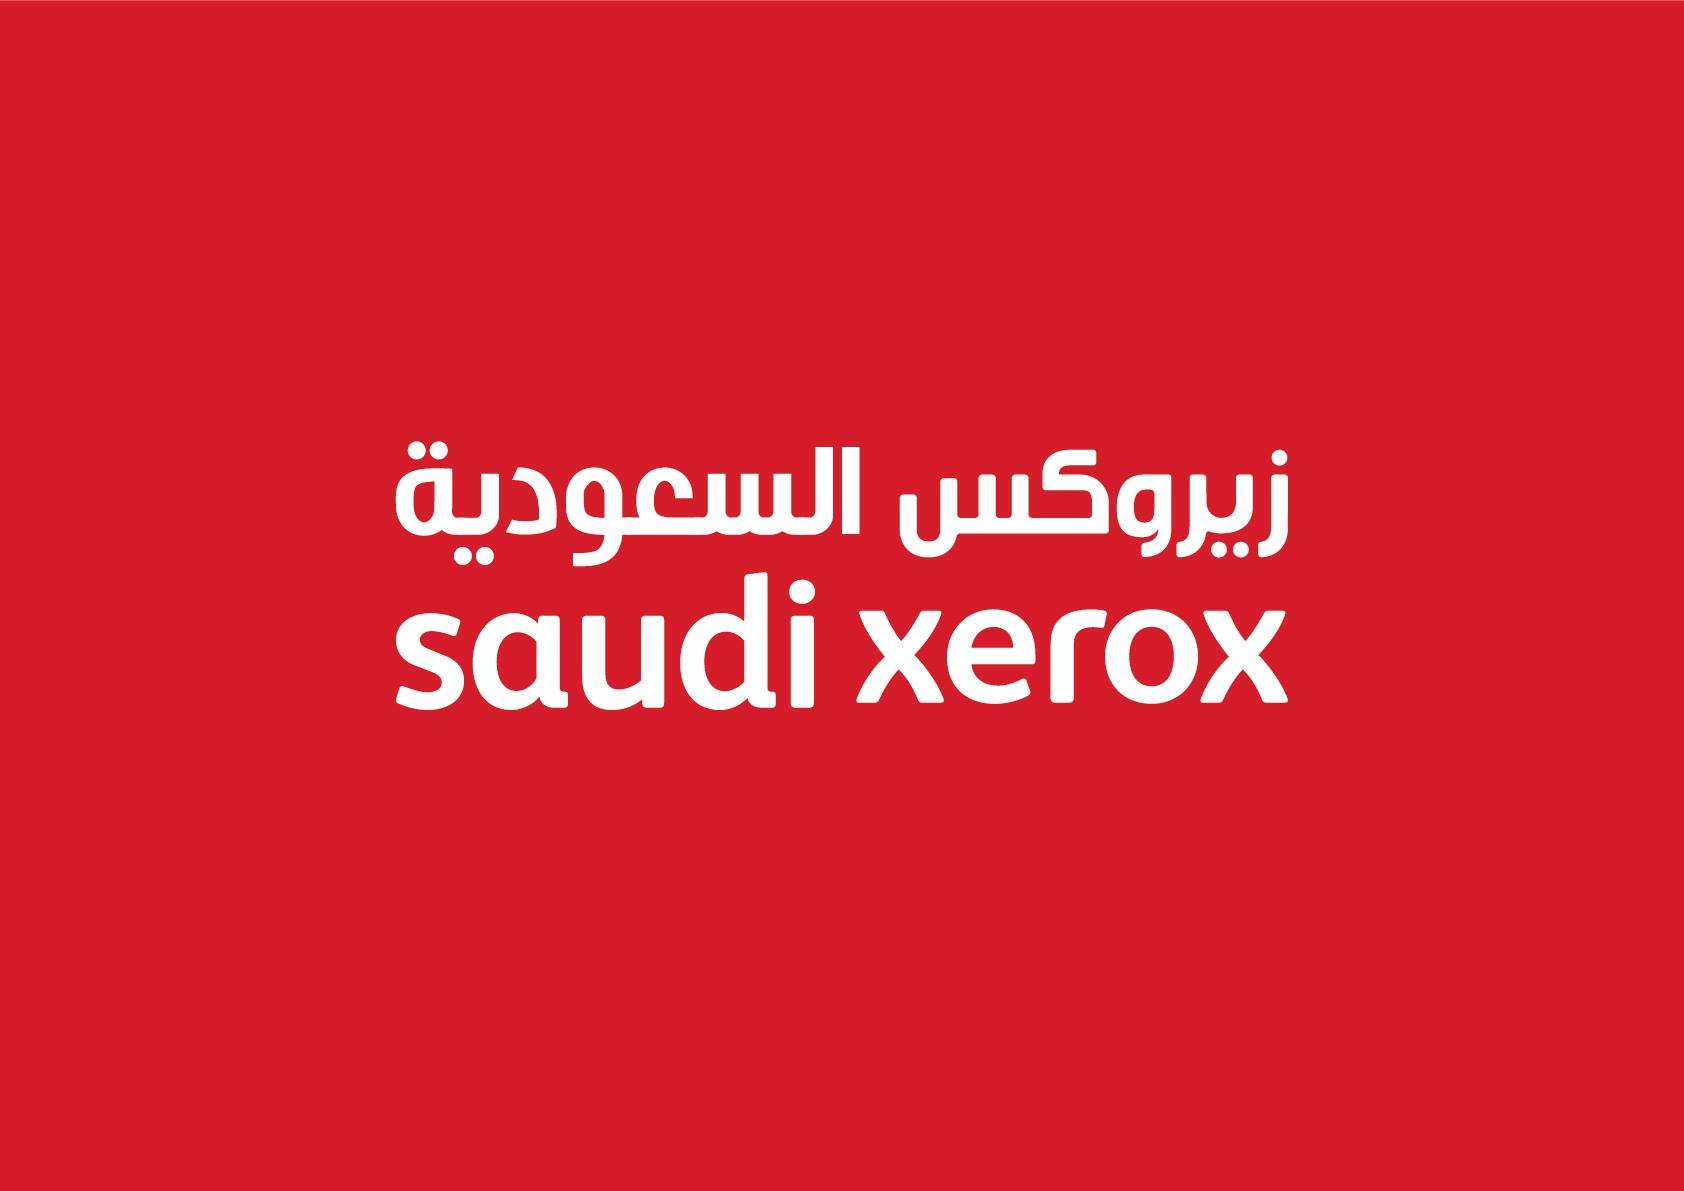 Image result for Saudi xerox